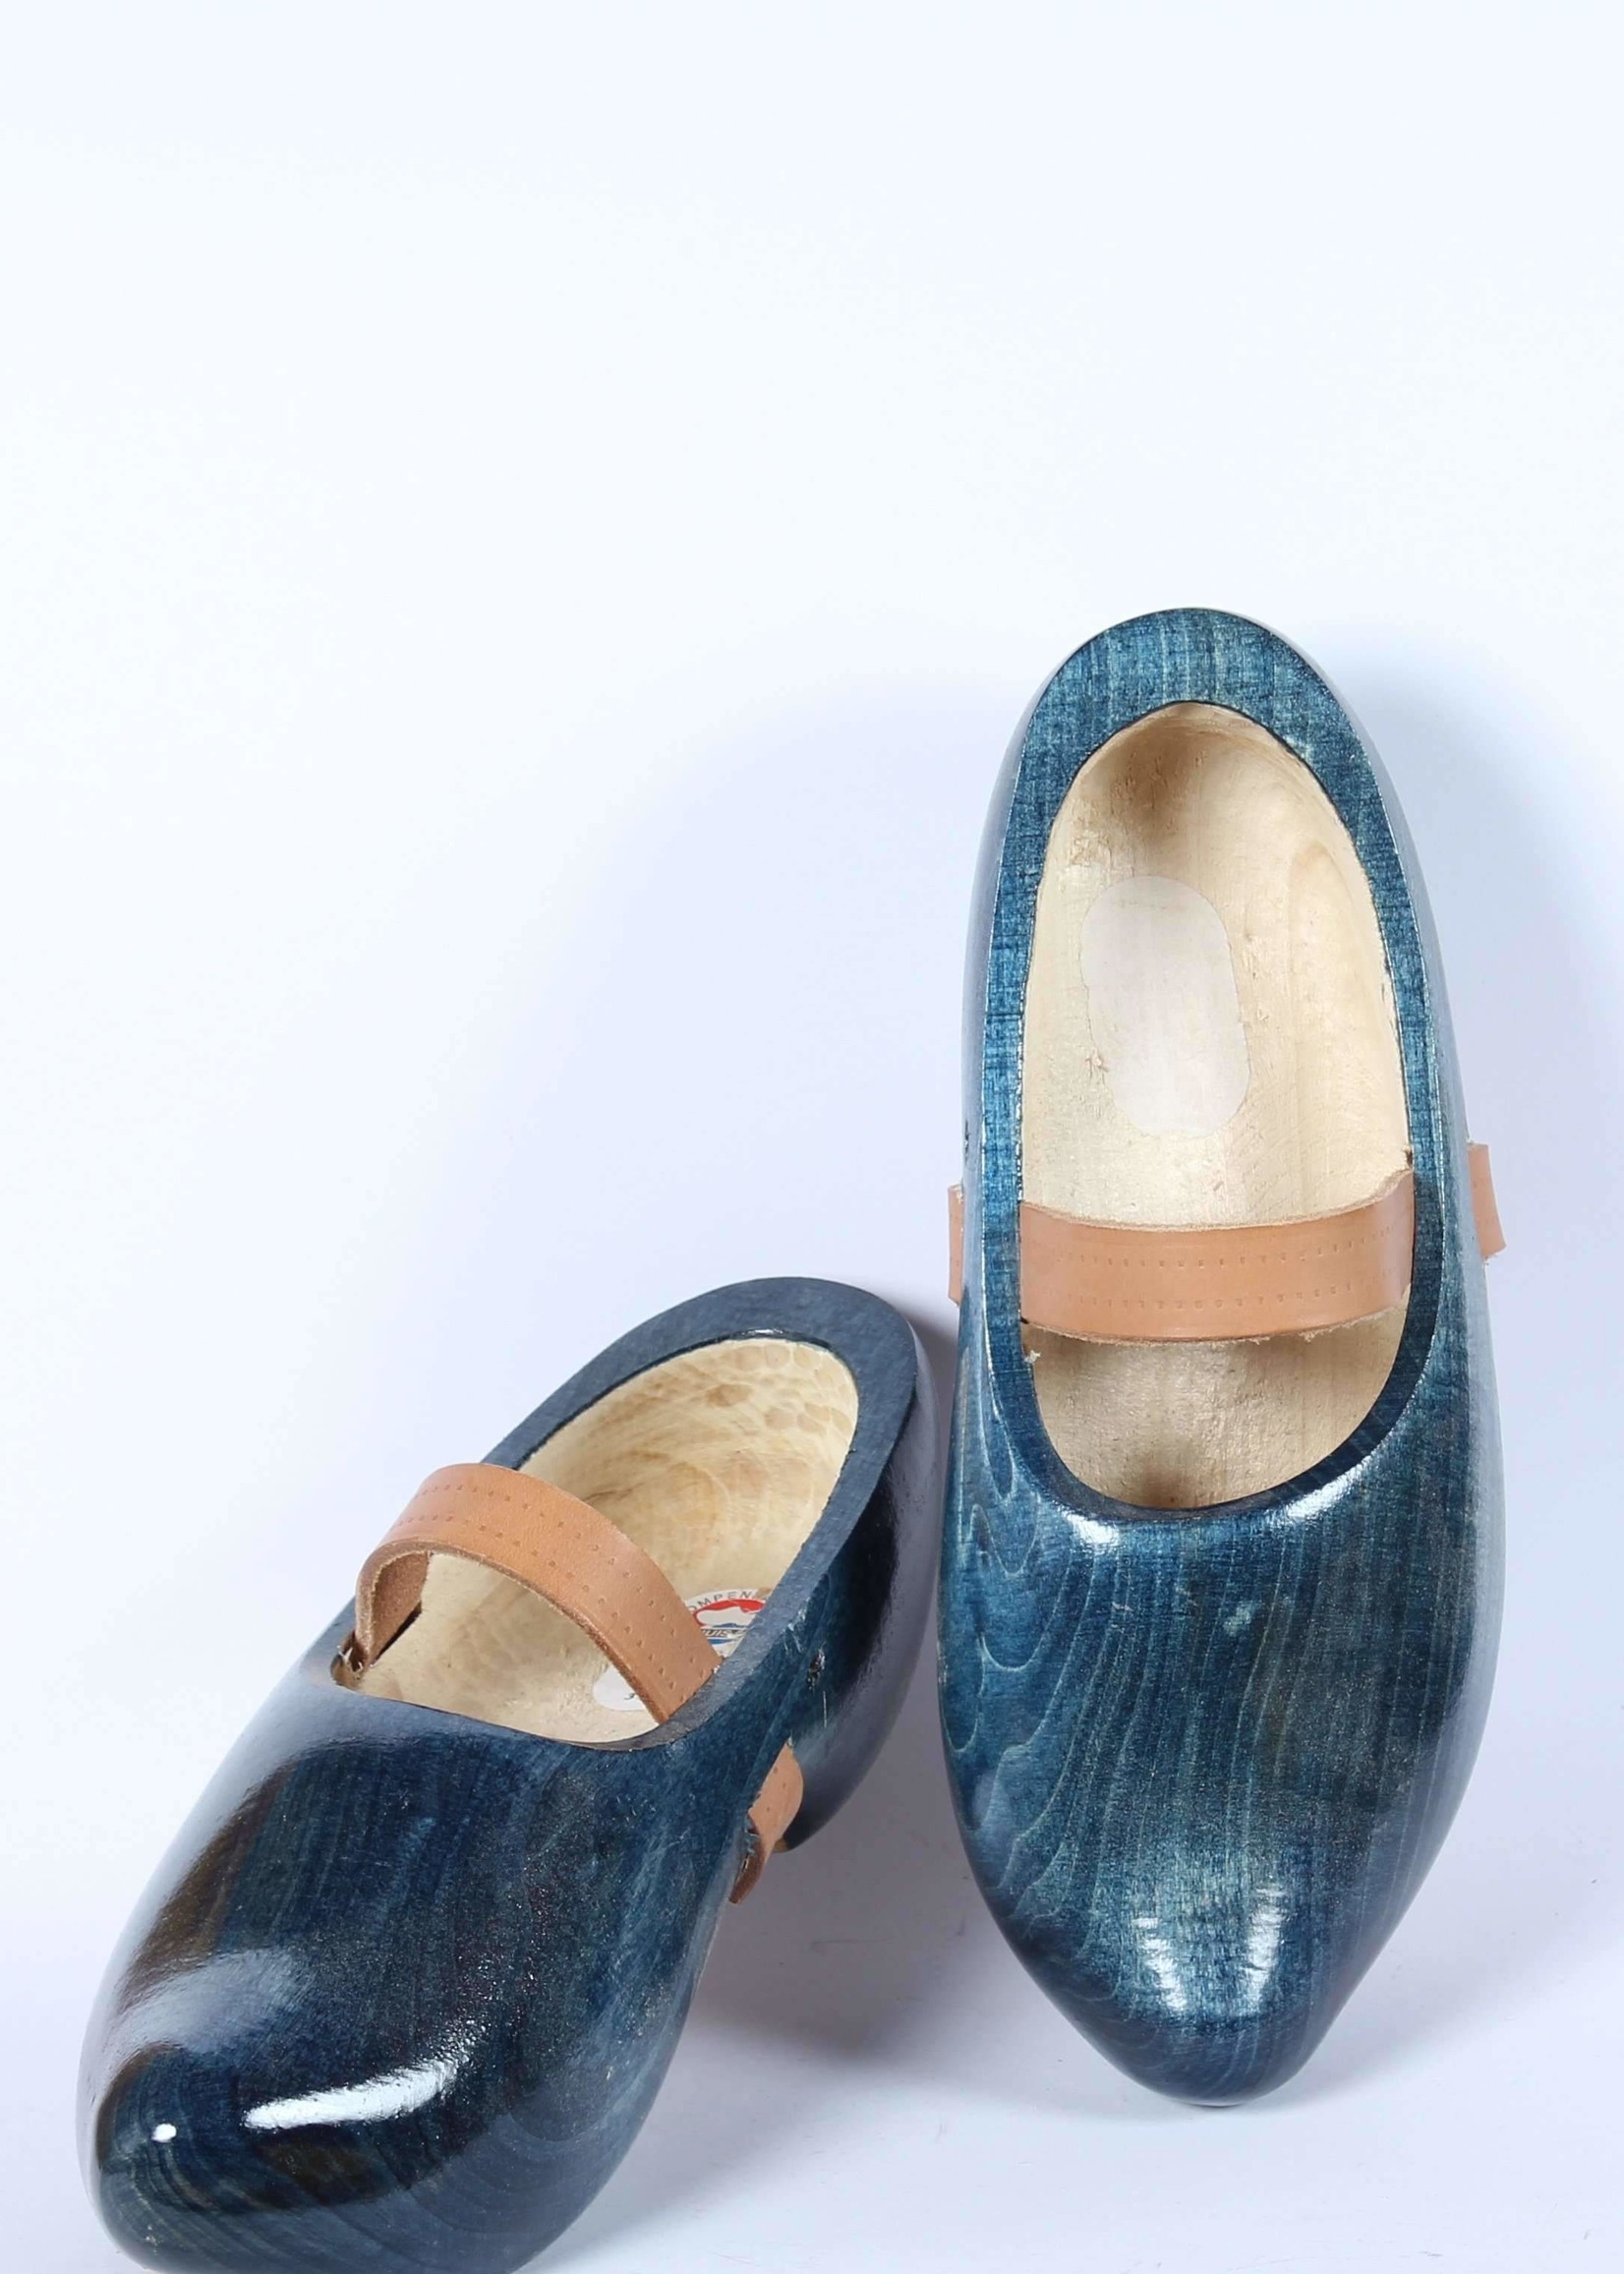 Wooden Shoe Factory Marken Wooden Shoes Tripklomp Denim, Leather Strap Clog